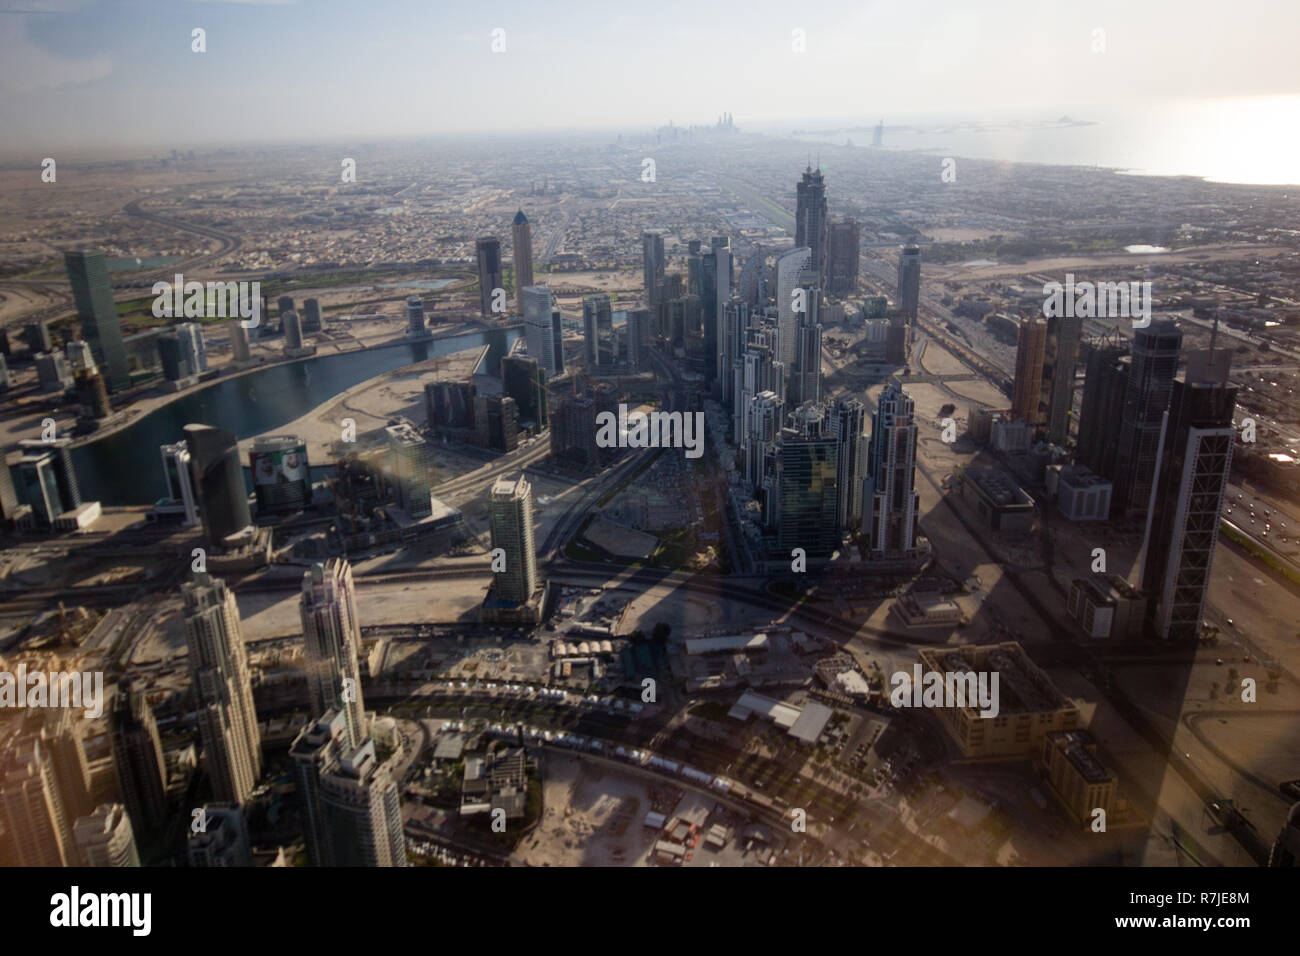 Panorama views of Dubai from the observation deck of the world record holding Burj Khalifa skyscraper in Dubai, United Arab Emirates. Stock Photo